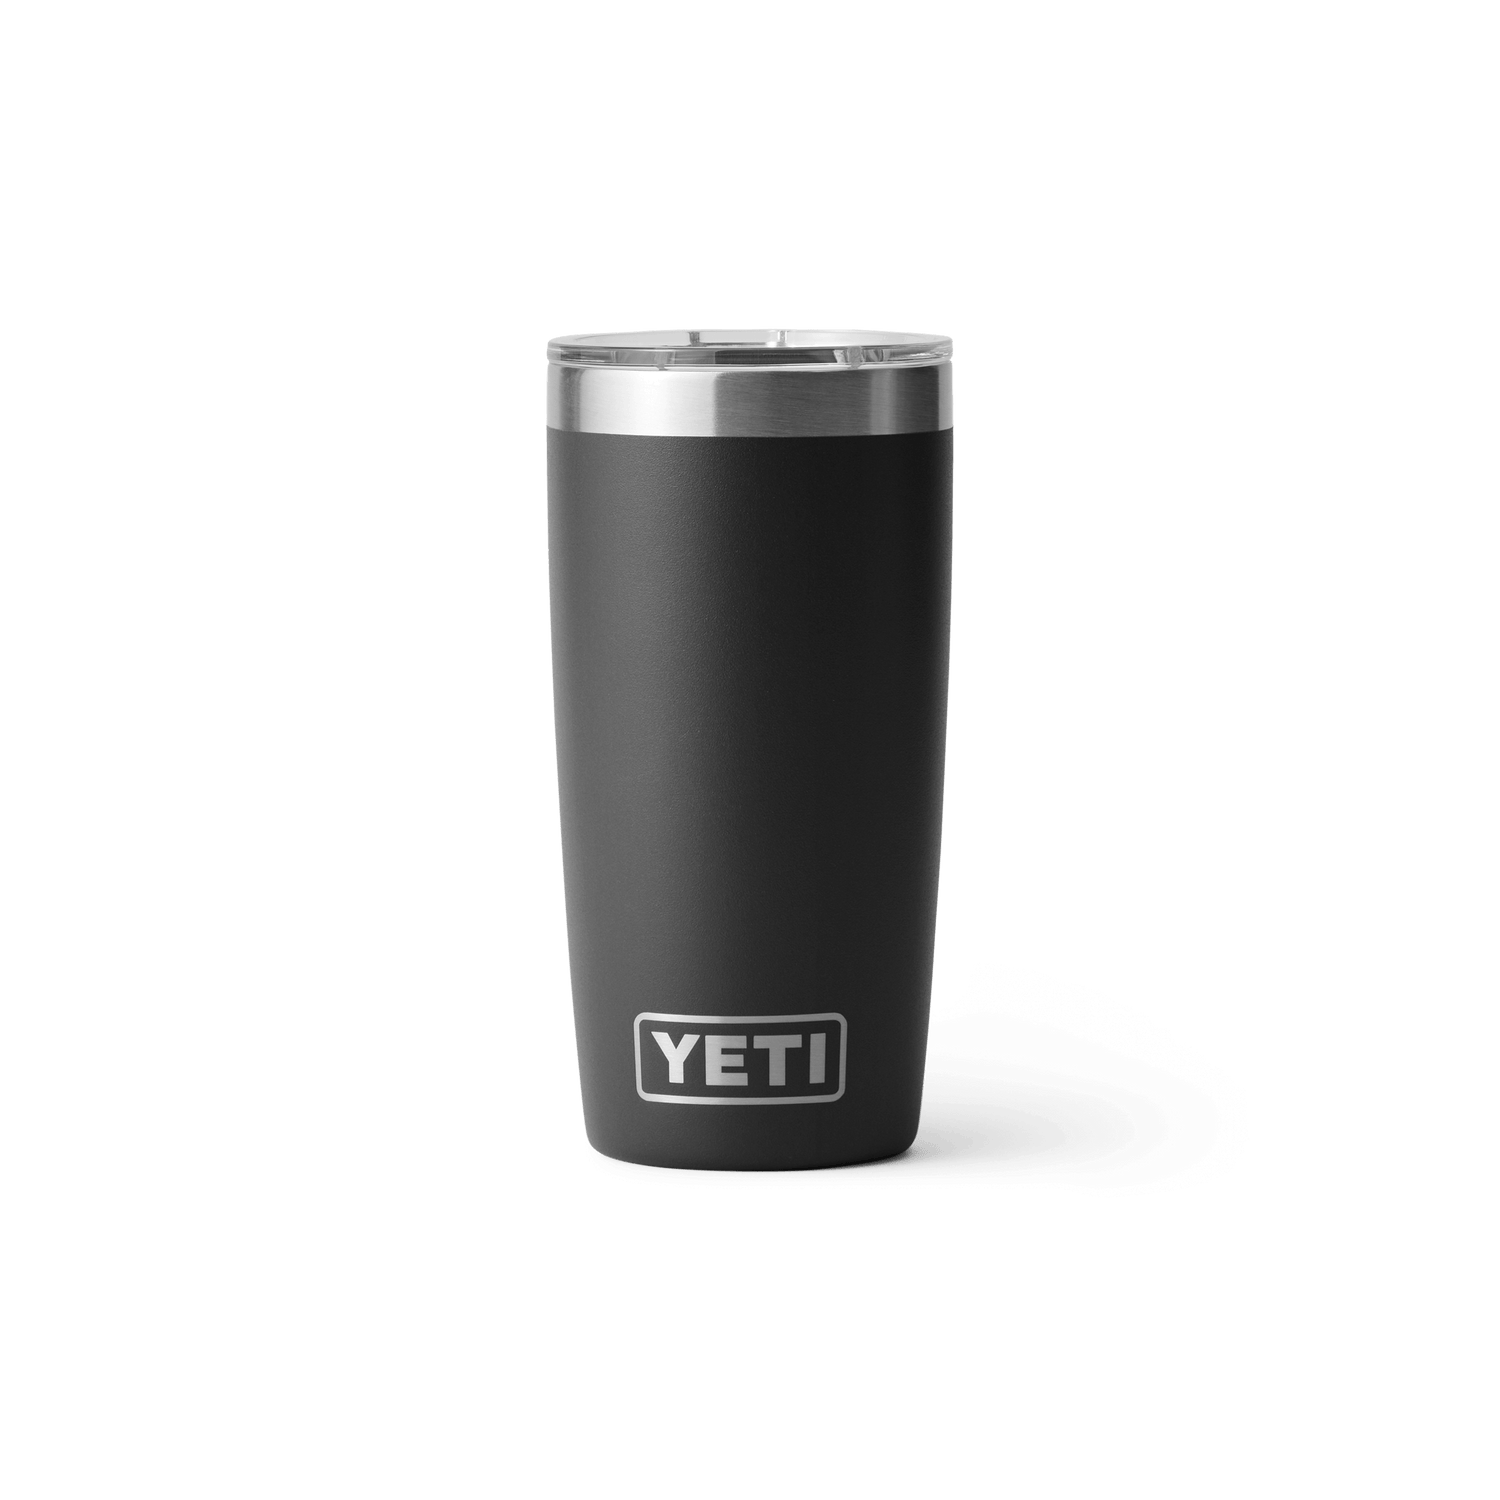 YETI Premium Cool Boxes, Drinkware, And More – YETI UK LIMITED